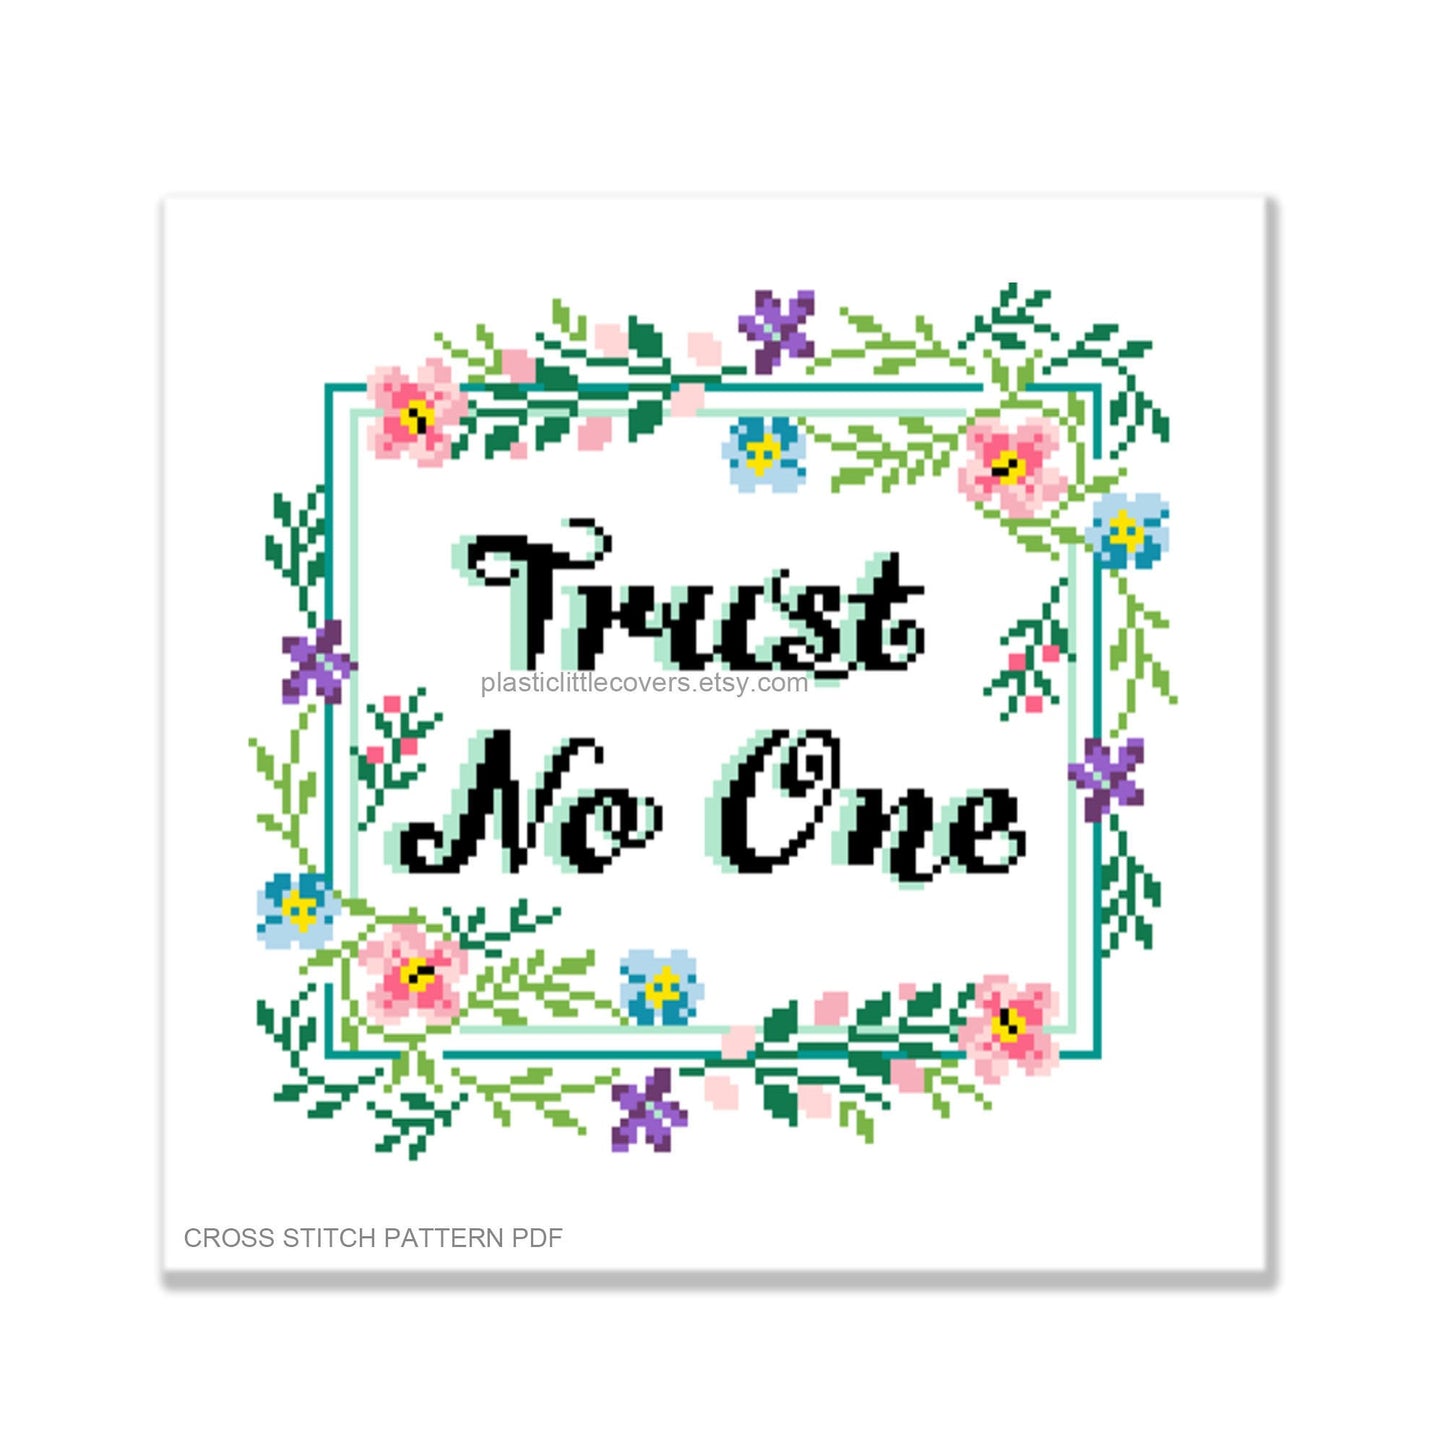 Trust No One - Cross Stitch Pattern PDF.